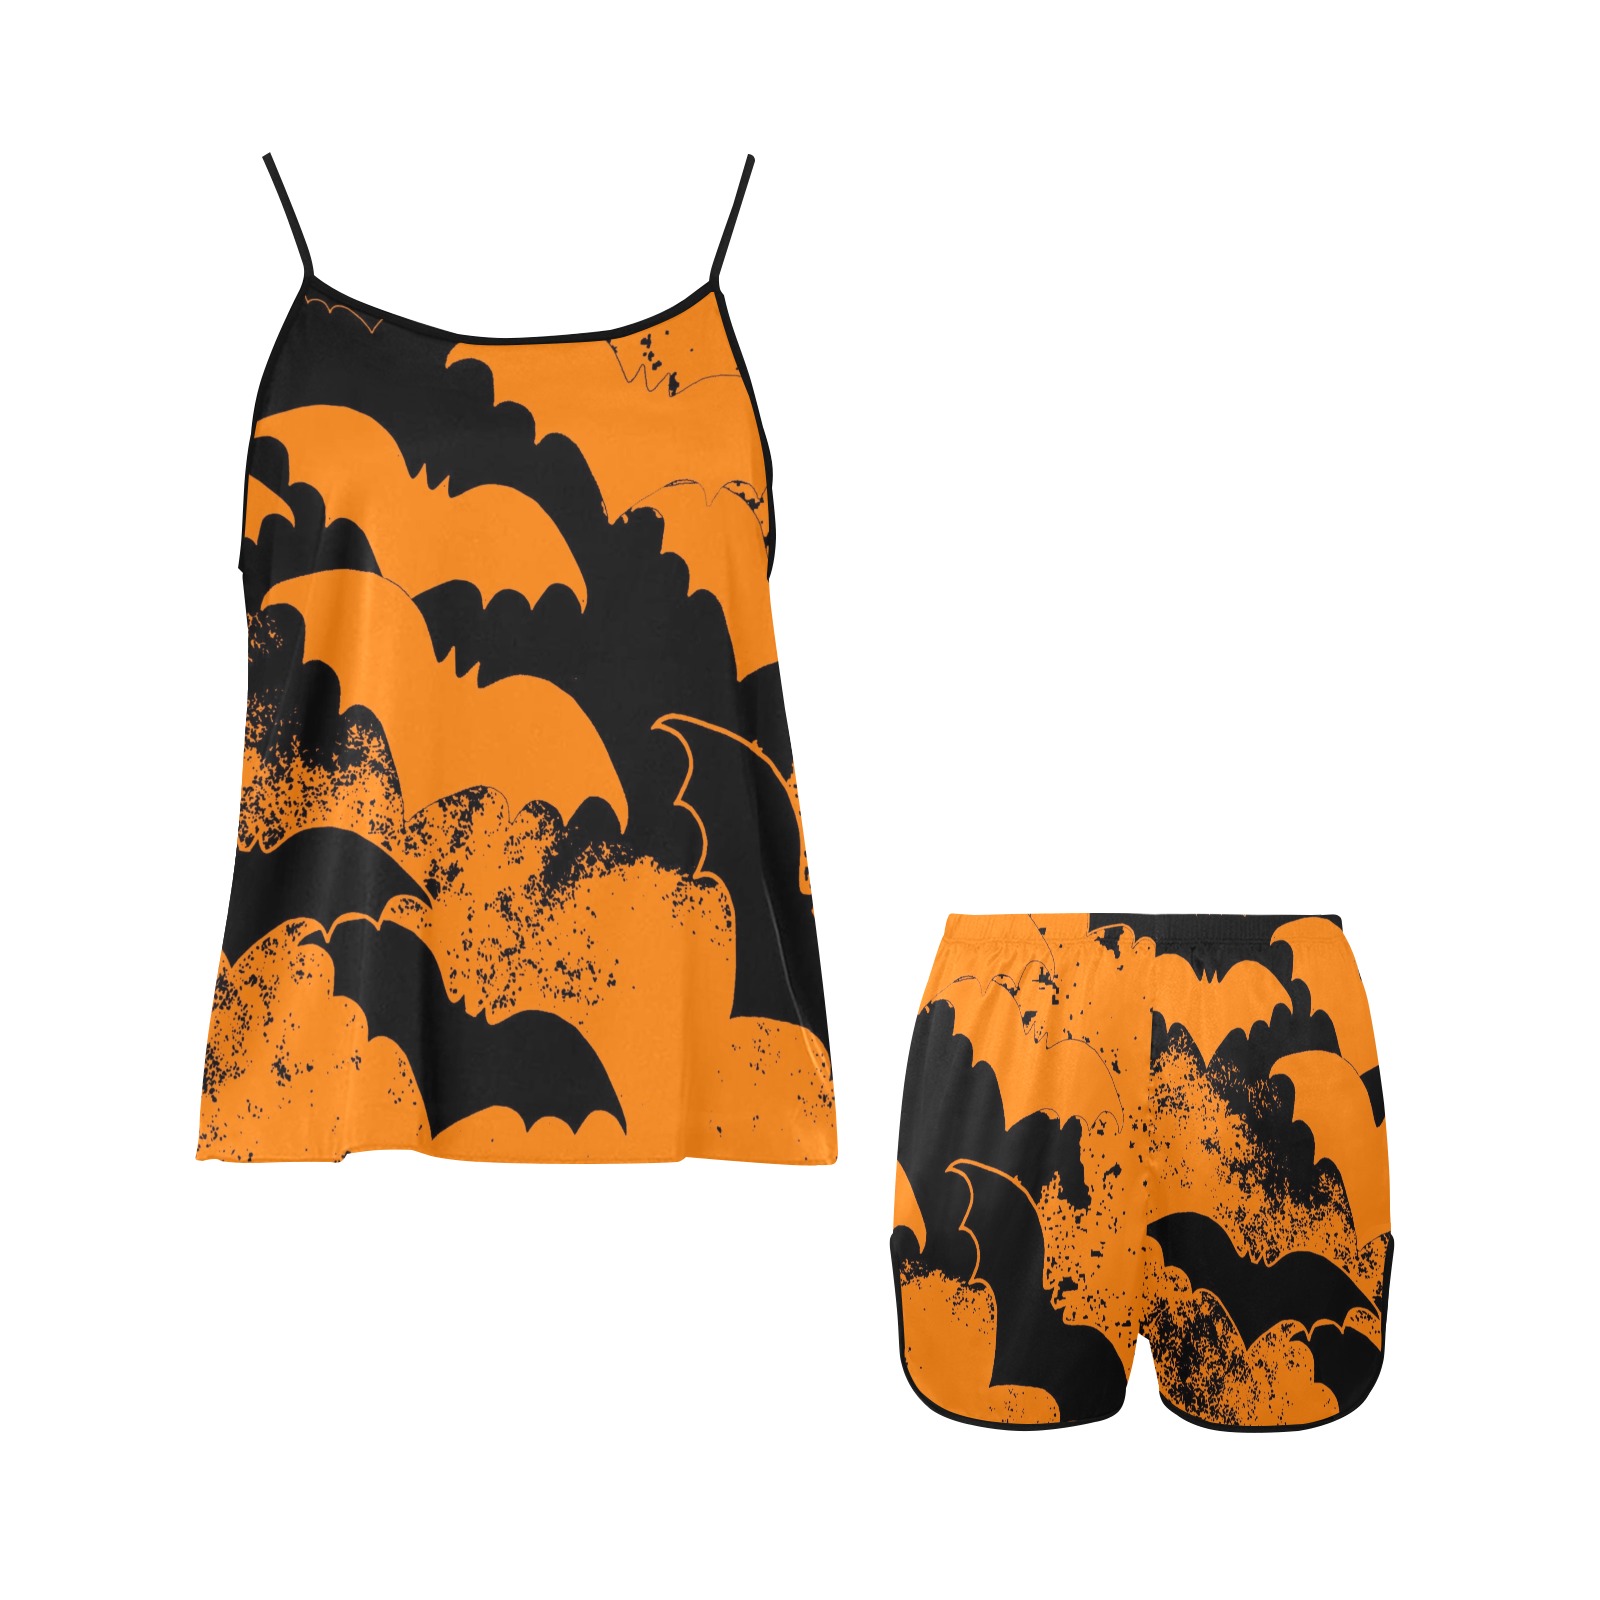 Black Bats In Flight Orange Women's Spaghetti Strap Short Pajama Set